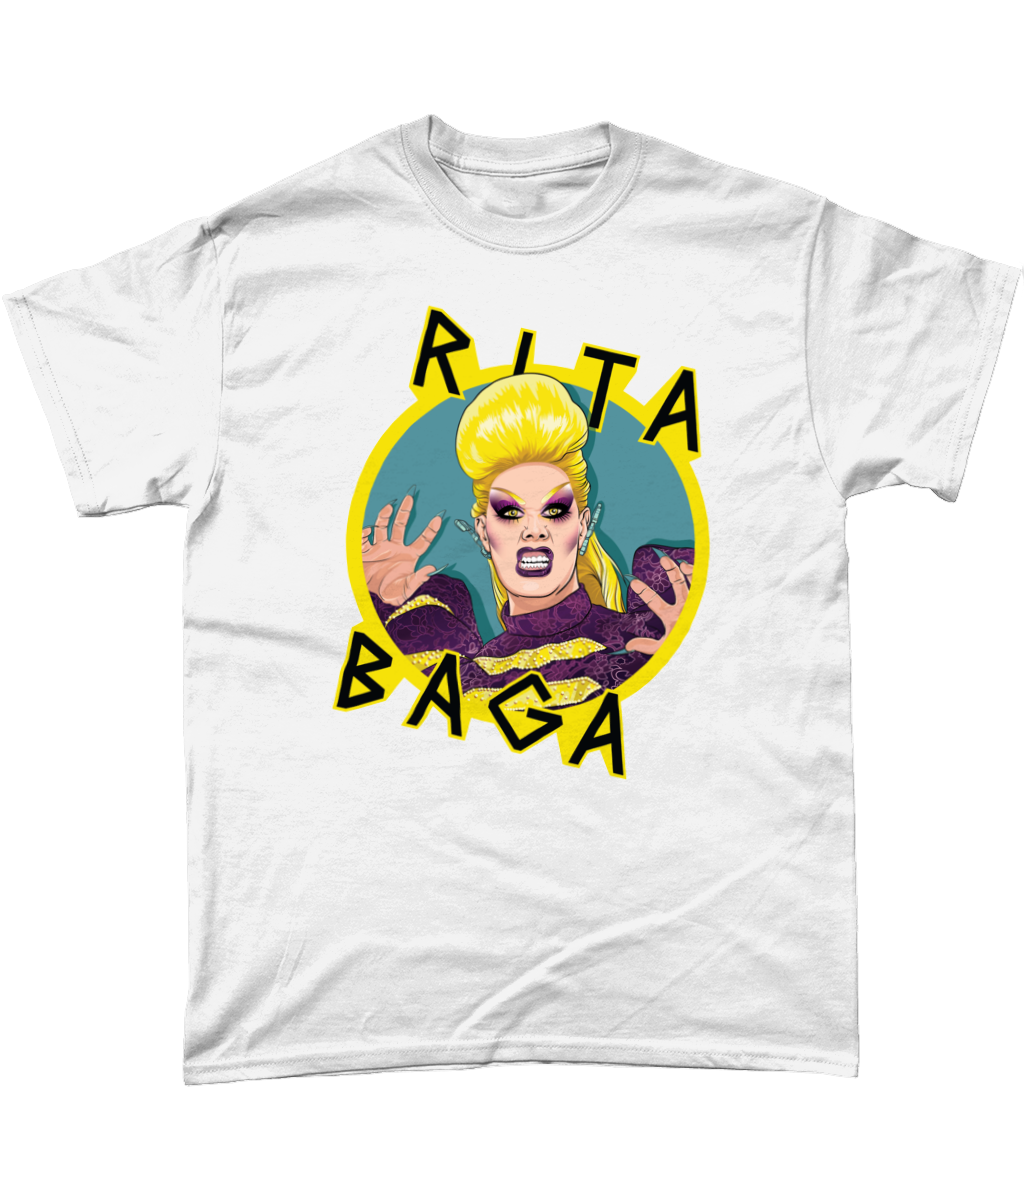 Rita Baga - T-Shirt - SNATCHED MERCH